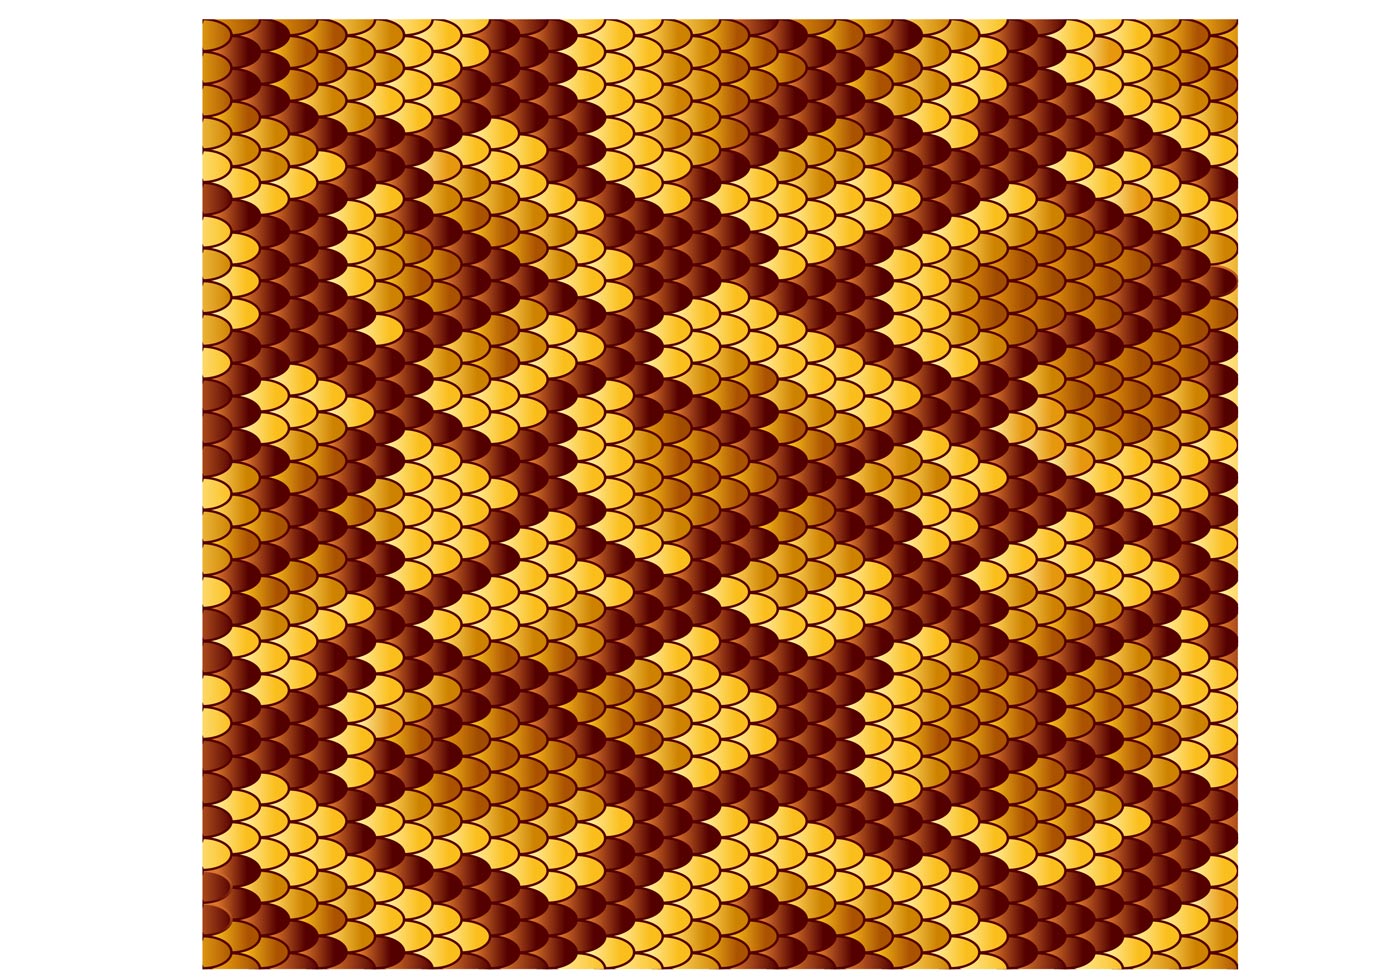 Snake Skin Pattern Vector - Download Free Vector Art, Stock Graphics